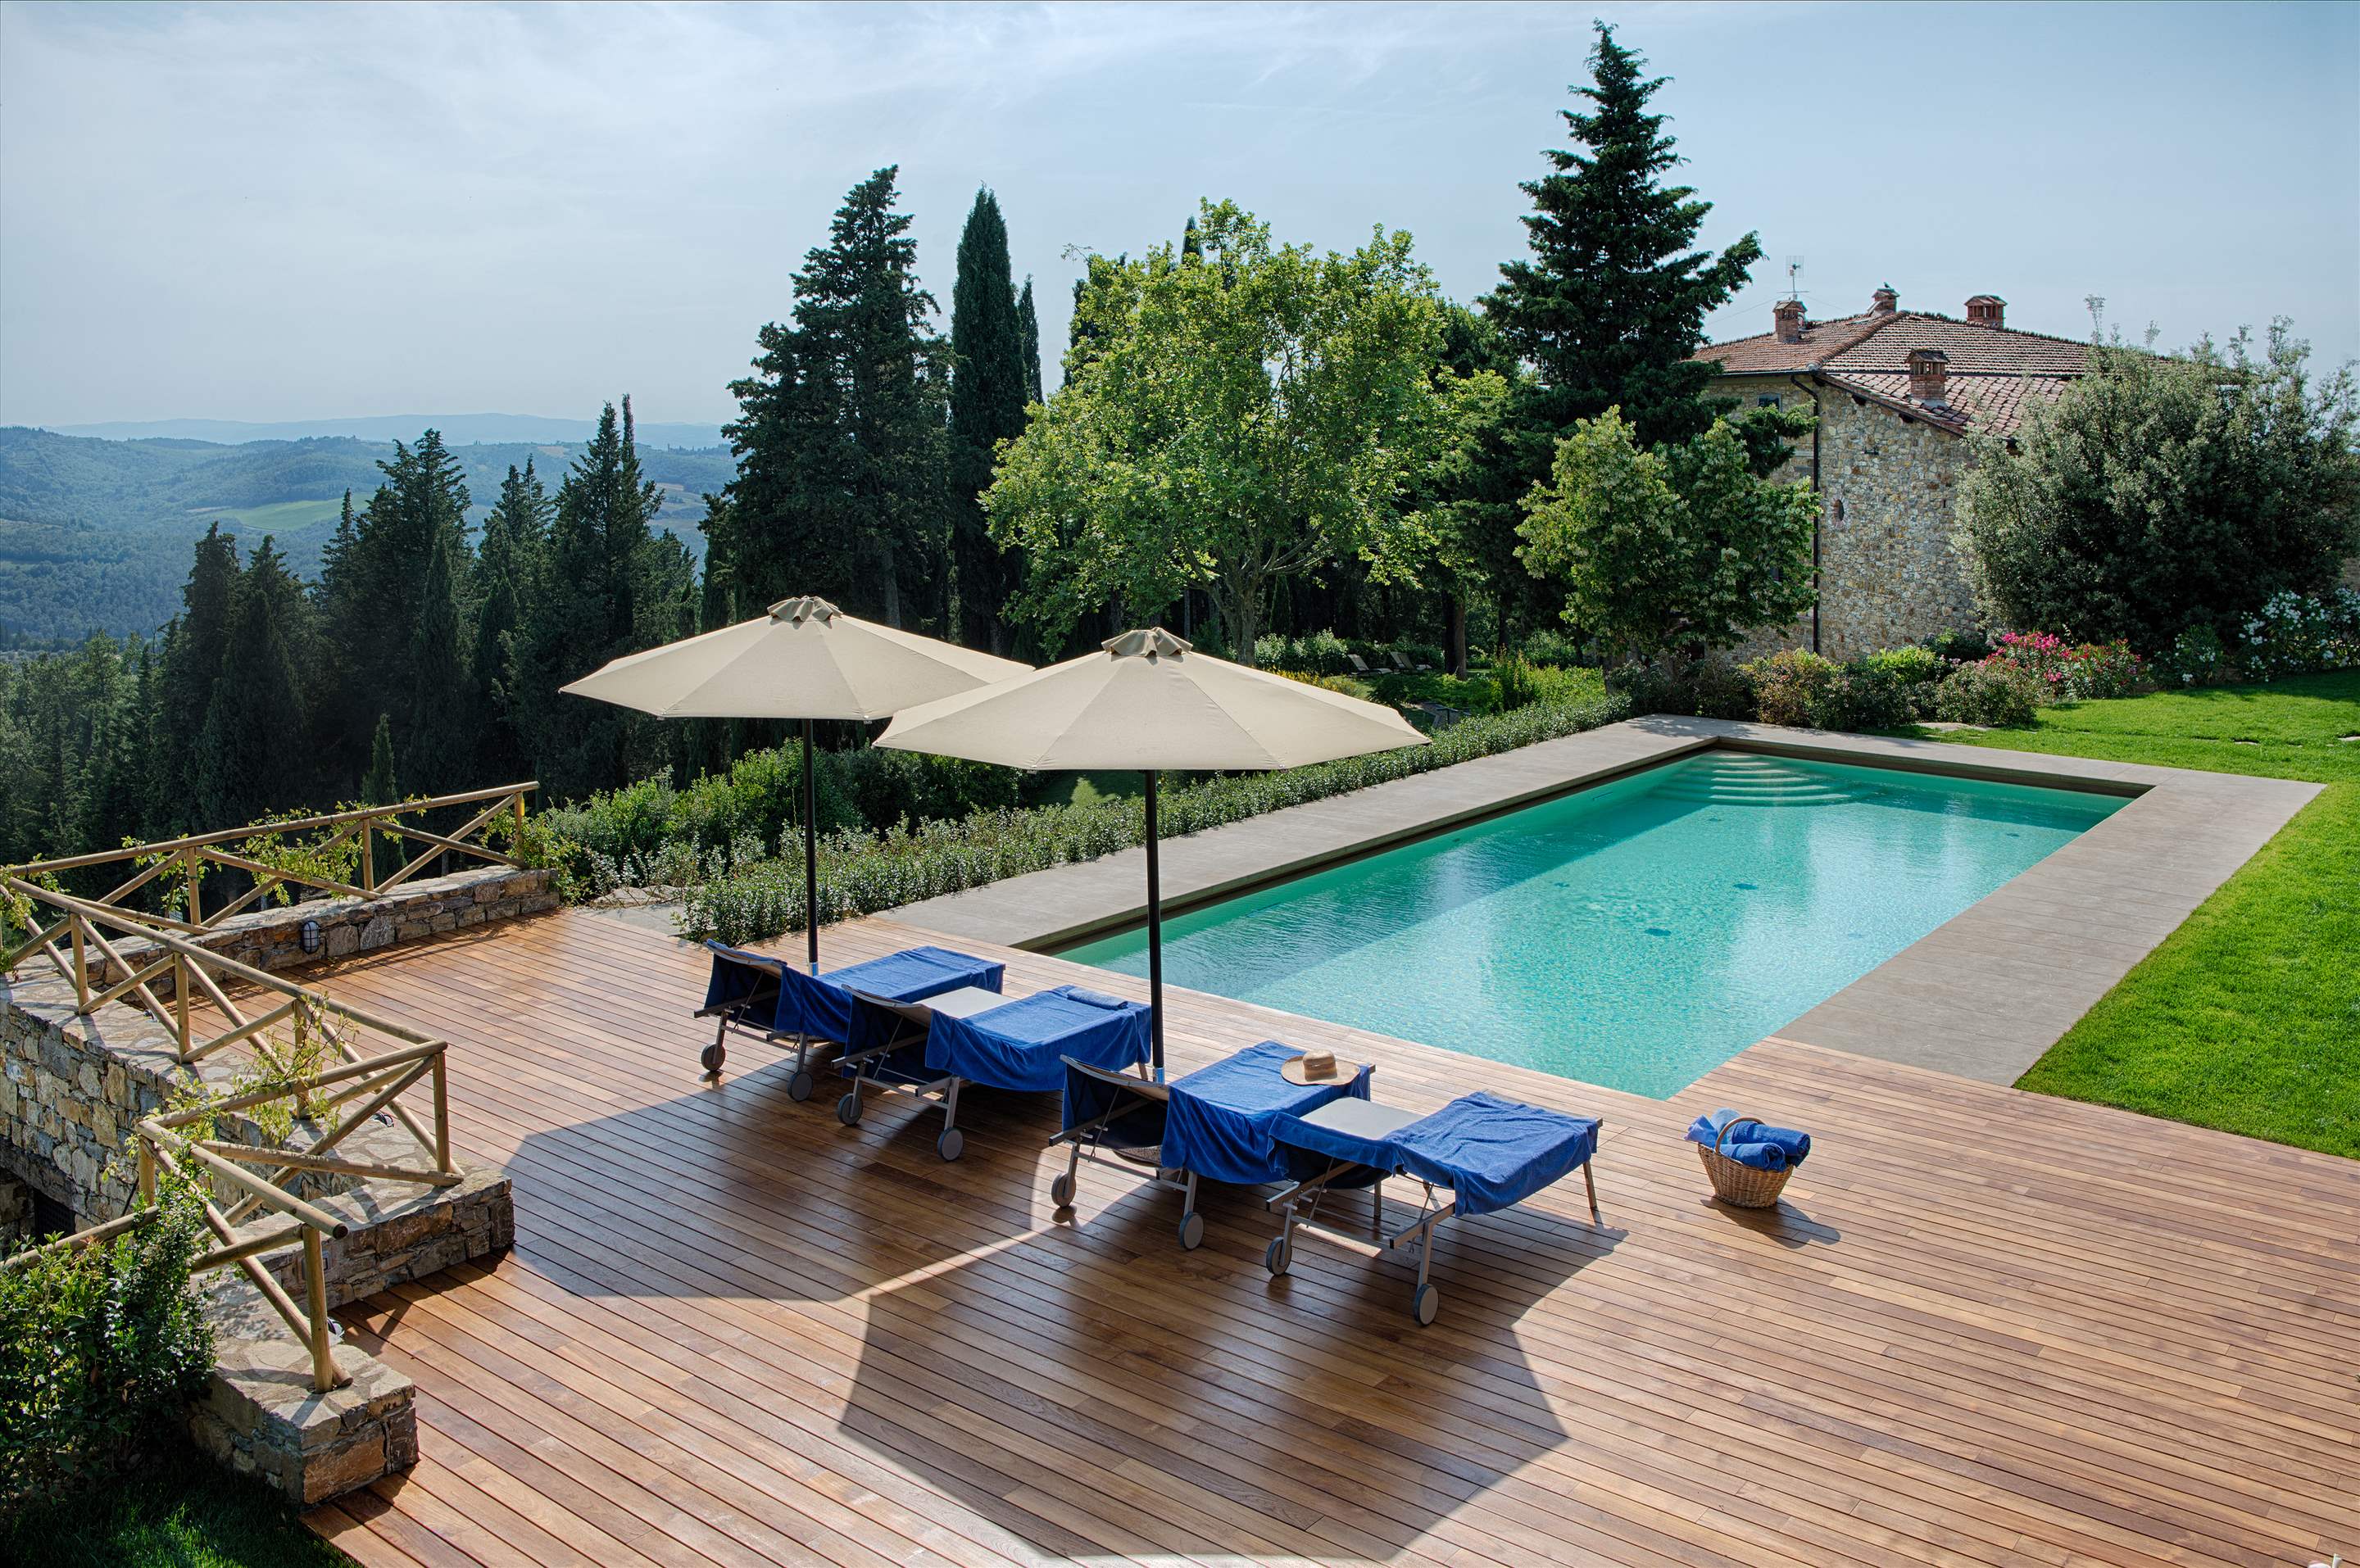 Villa La Valetta, Apt Rosa + 1 Bedroom, 2 bedroom villa in Chianti & Countryside, Tuscany Photo #1